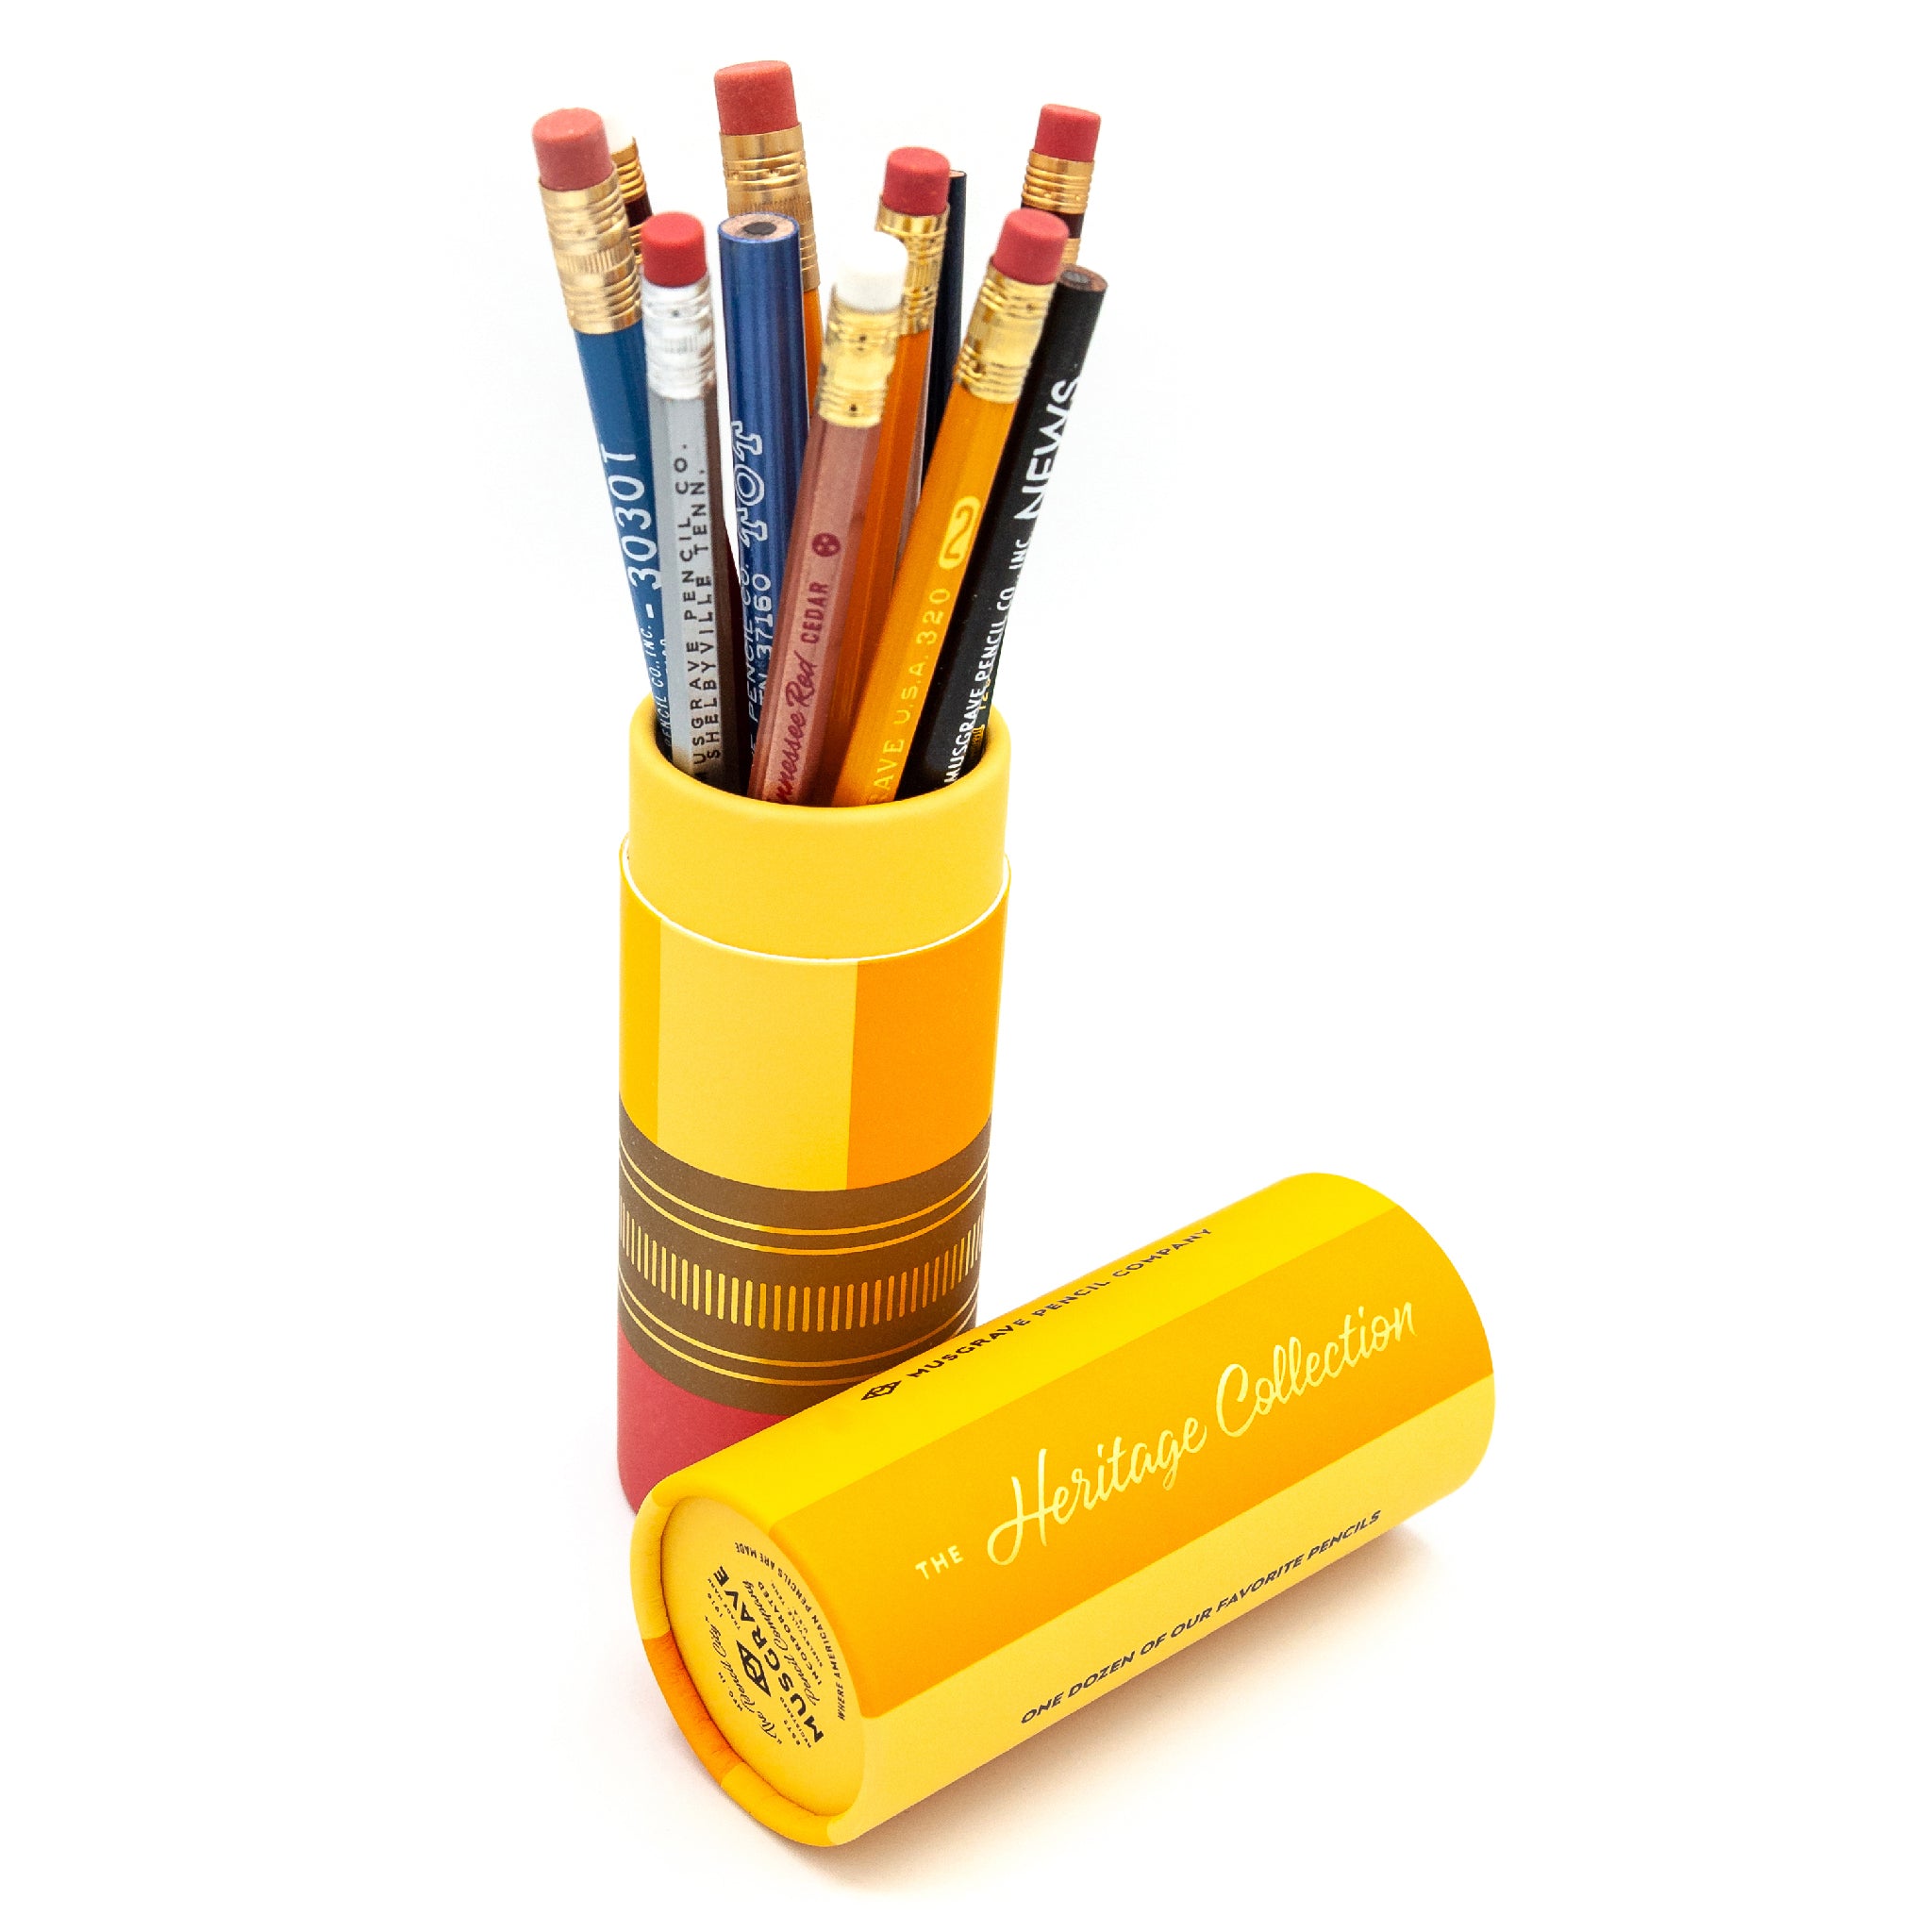 Designer Pencils, Fun Pencils for Kids